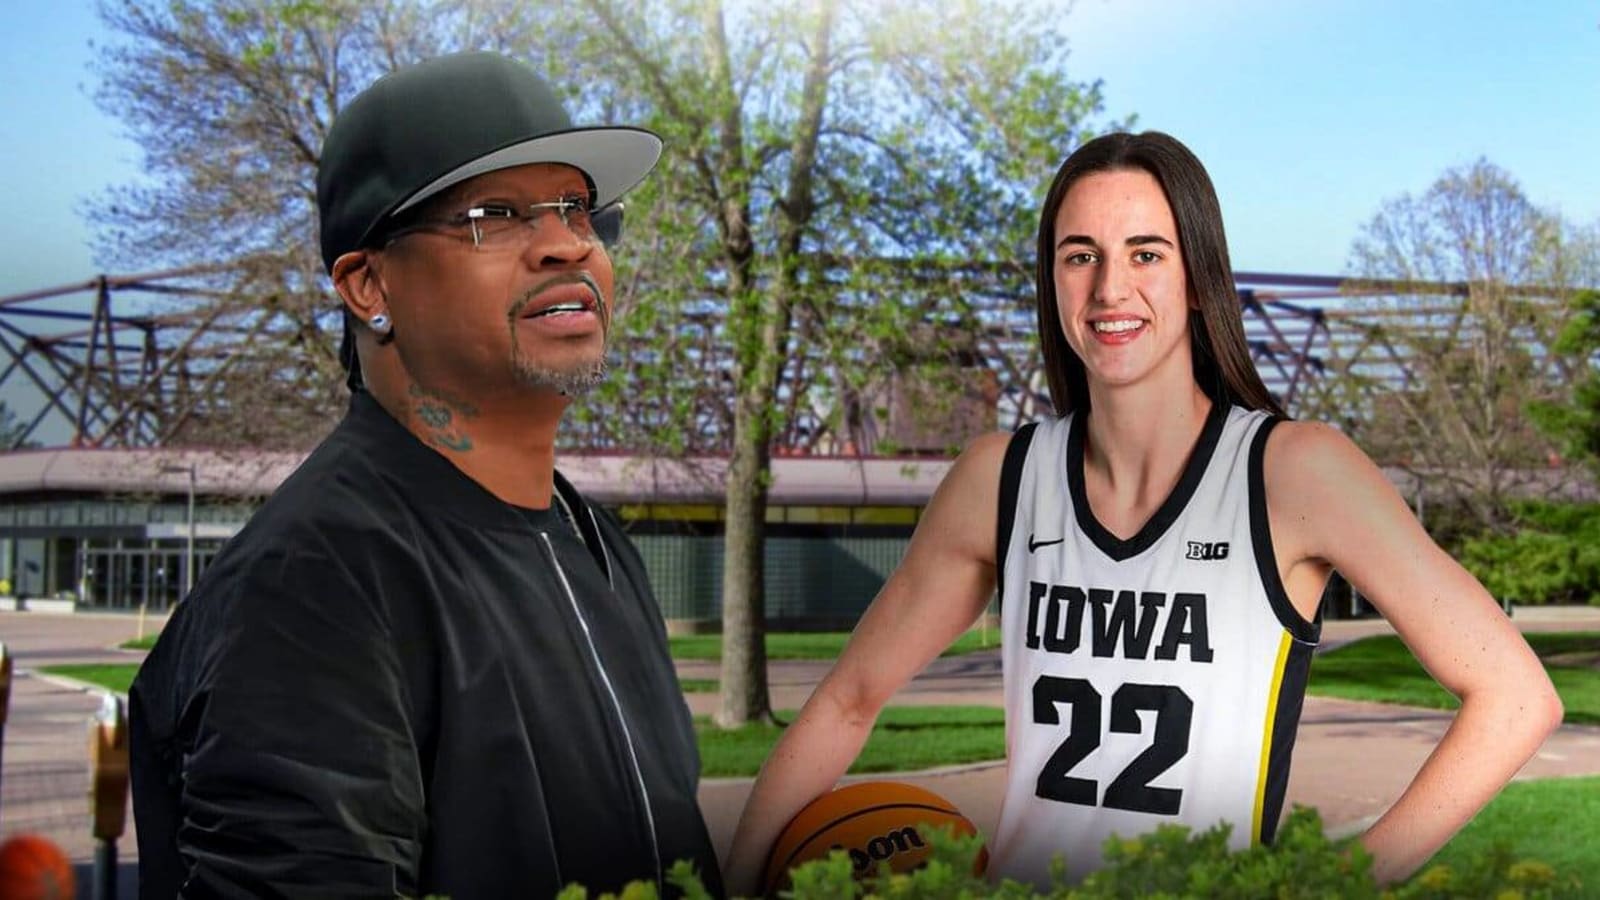 Allen Iverson's has beautiful message for Iowa's Caitlin Clark ahead of NCAA Tournament